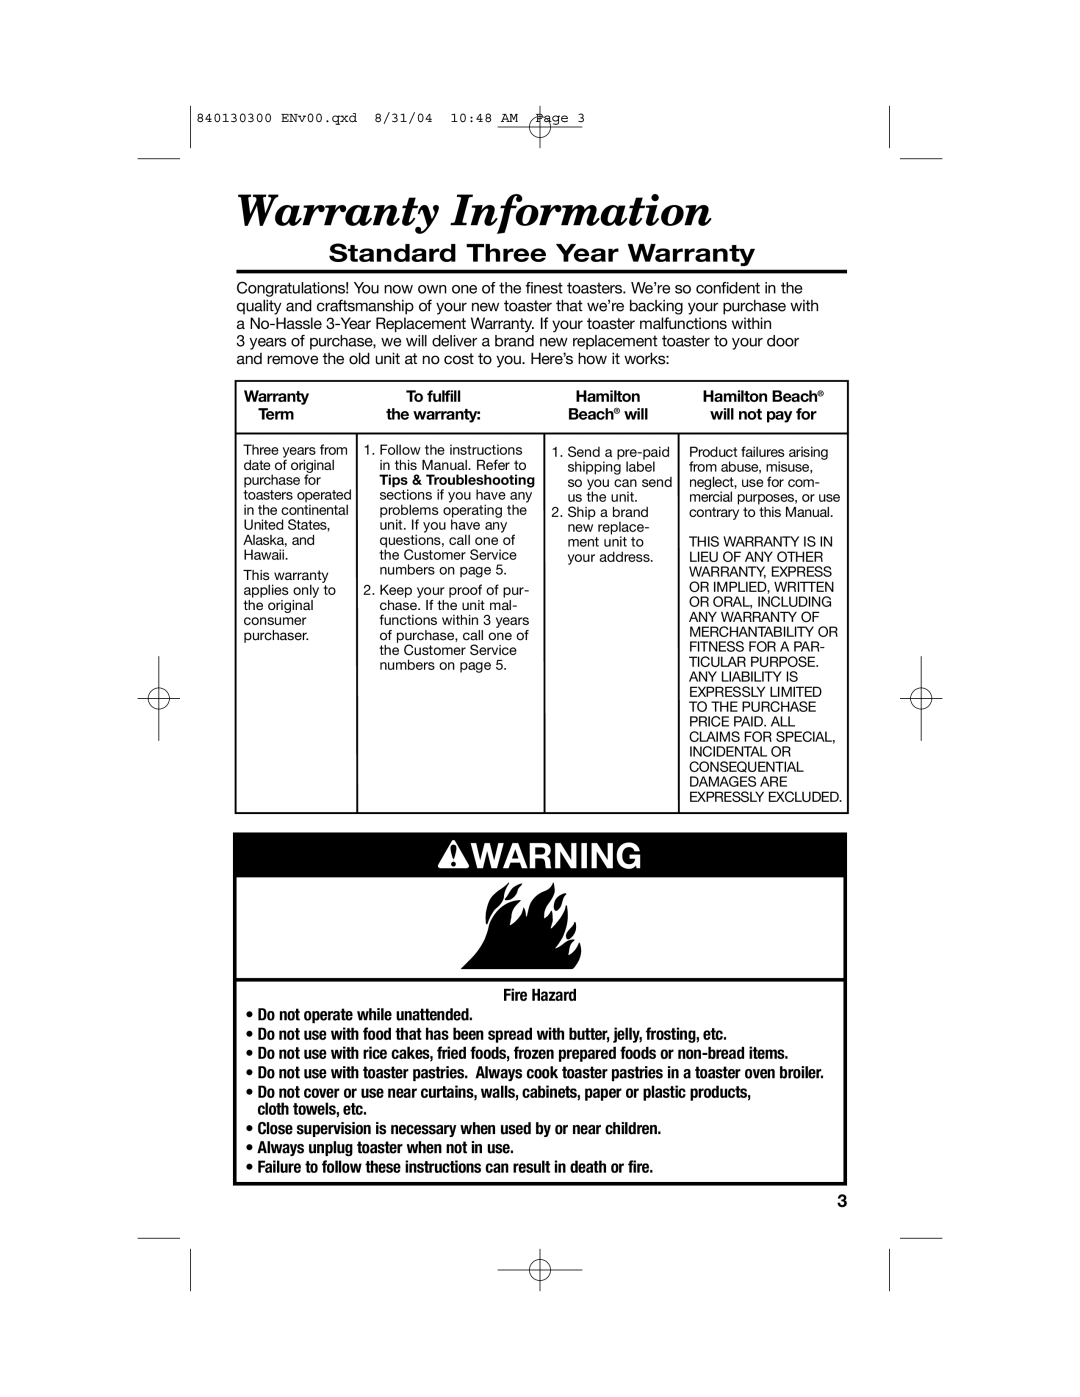 Hamilton Beach All-Metal Toasters manual Warranty Information, wWARNING, Standard Three Year Warranty 